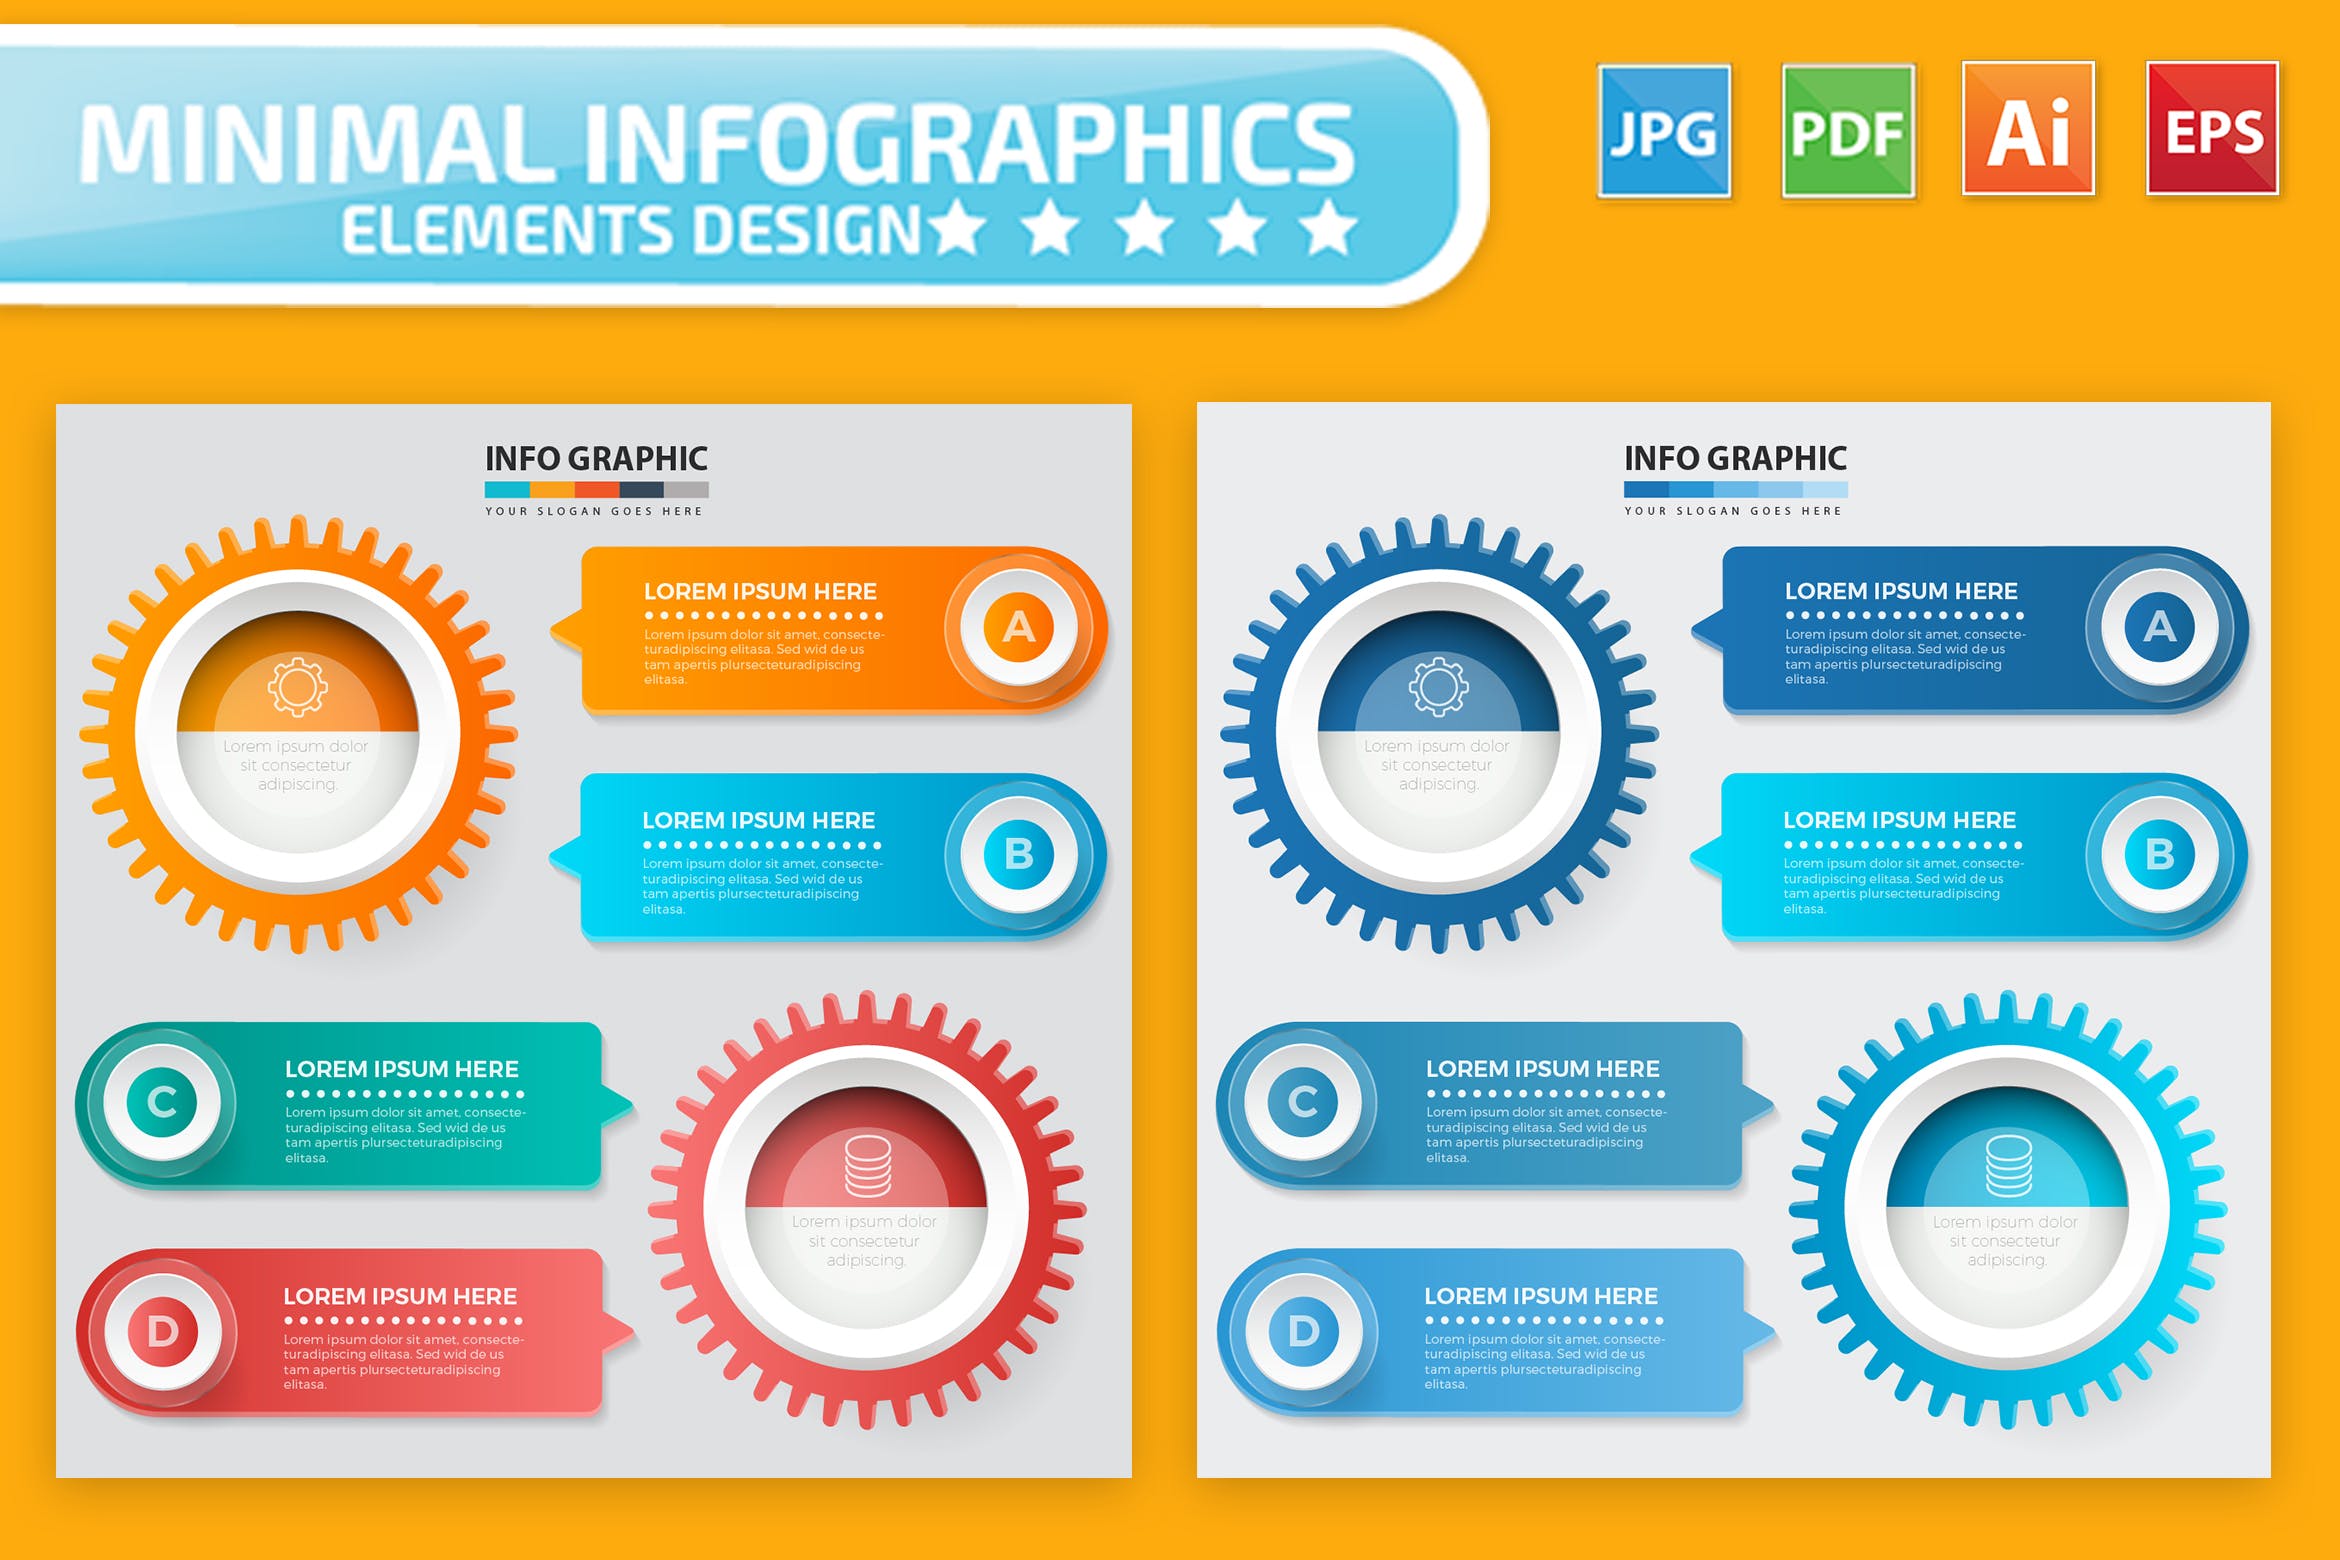 齿轮设计风格信息图表设计矢量图形素材 Cog Infographic Elements Design插图